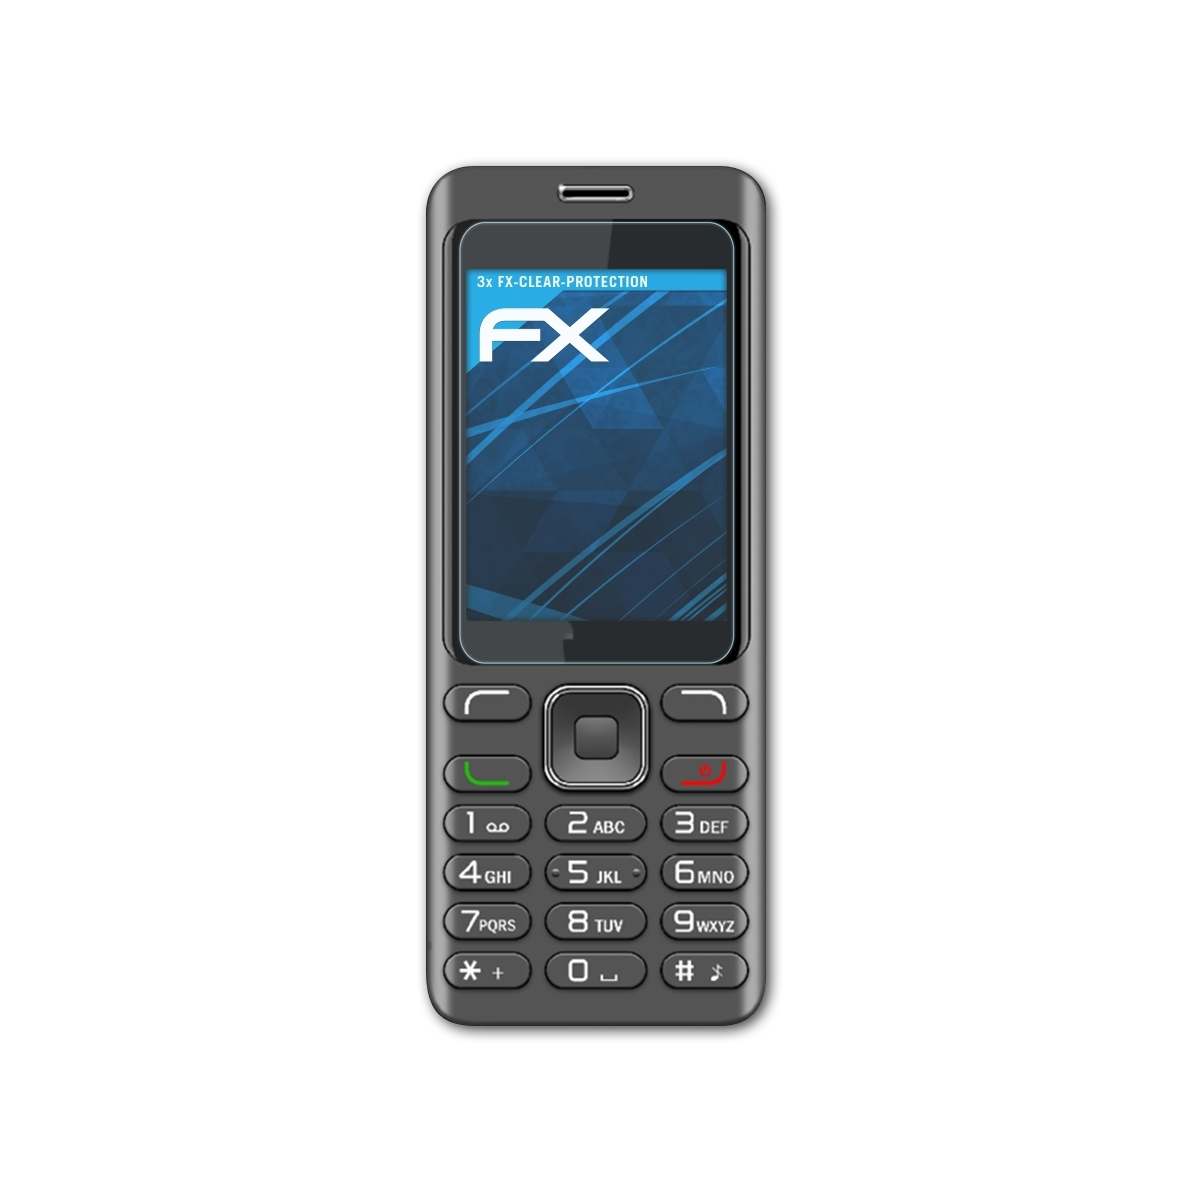 FX-Clear Displayschutz(für ATFOLIX 3x Beafon C160)